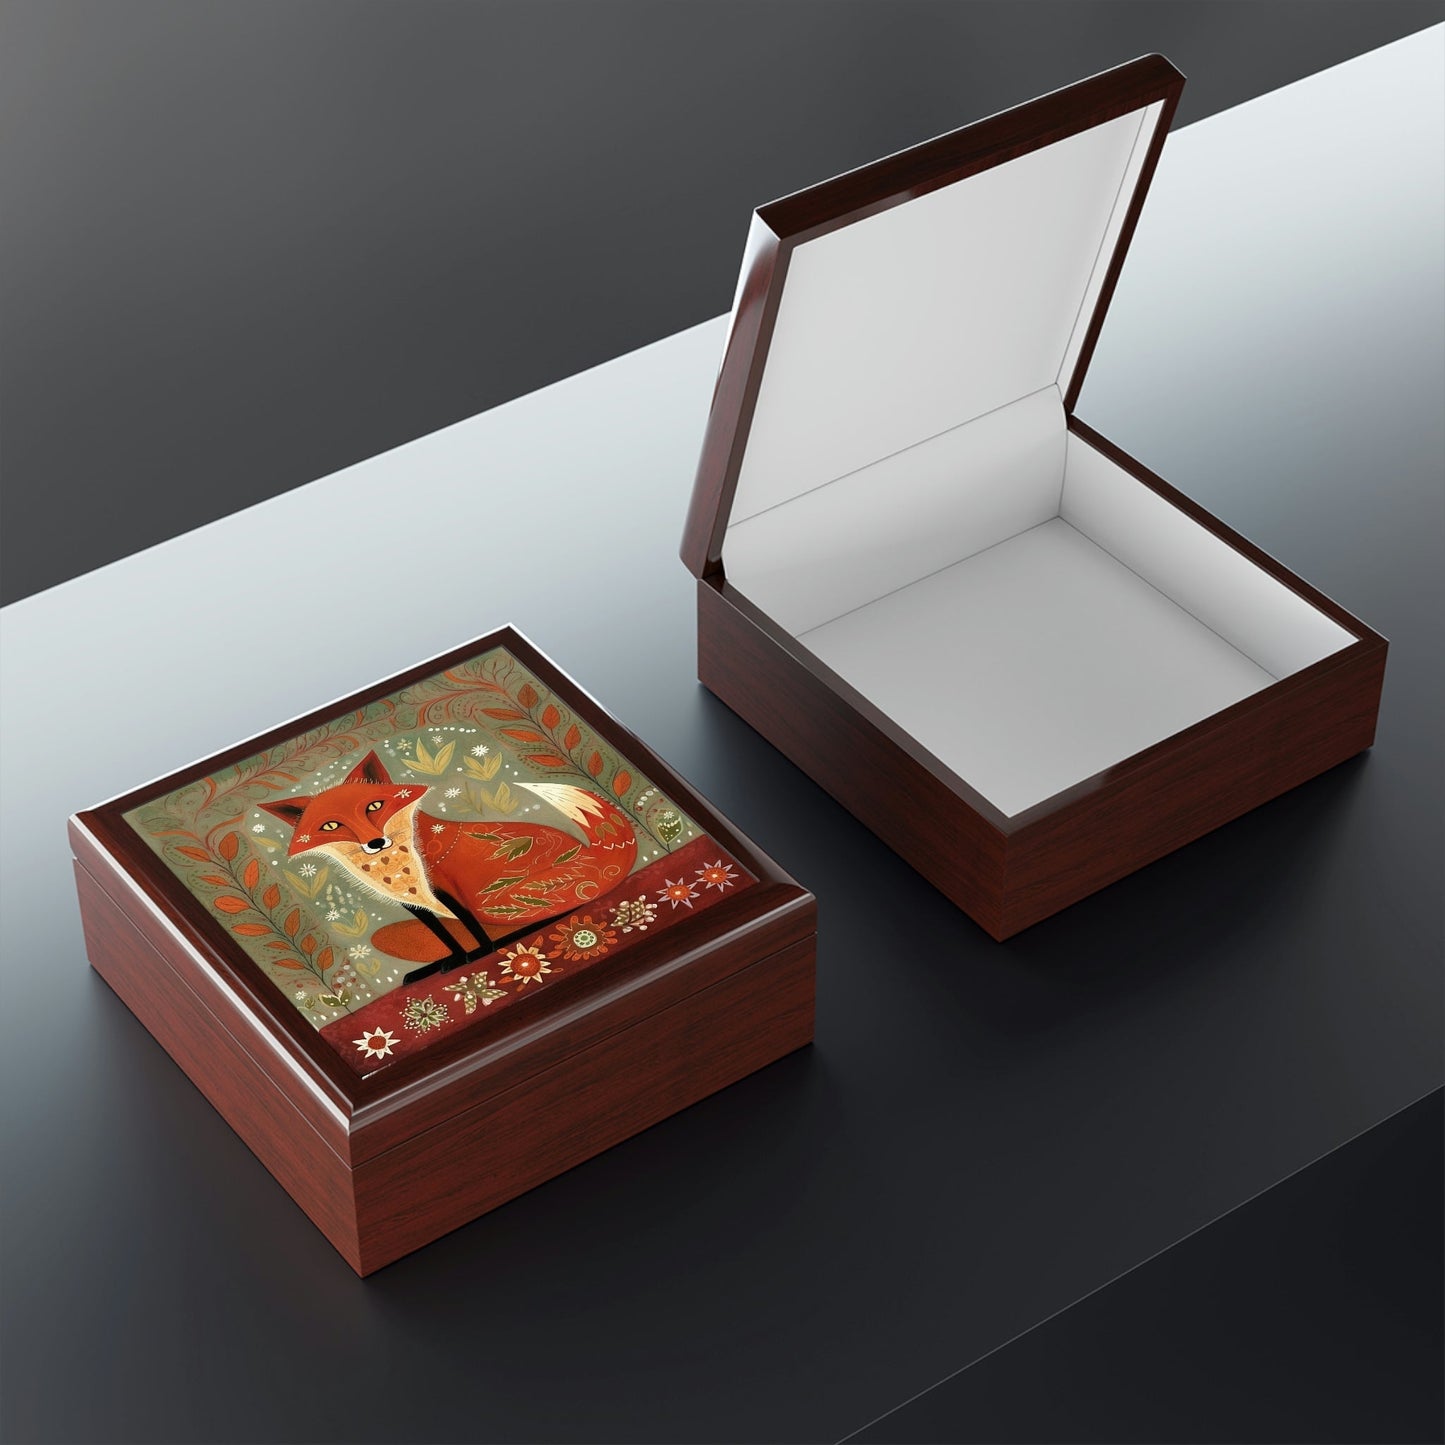 Rustic Folk Art Red Fox Design Wooden Keepsake Jewelry Box